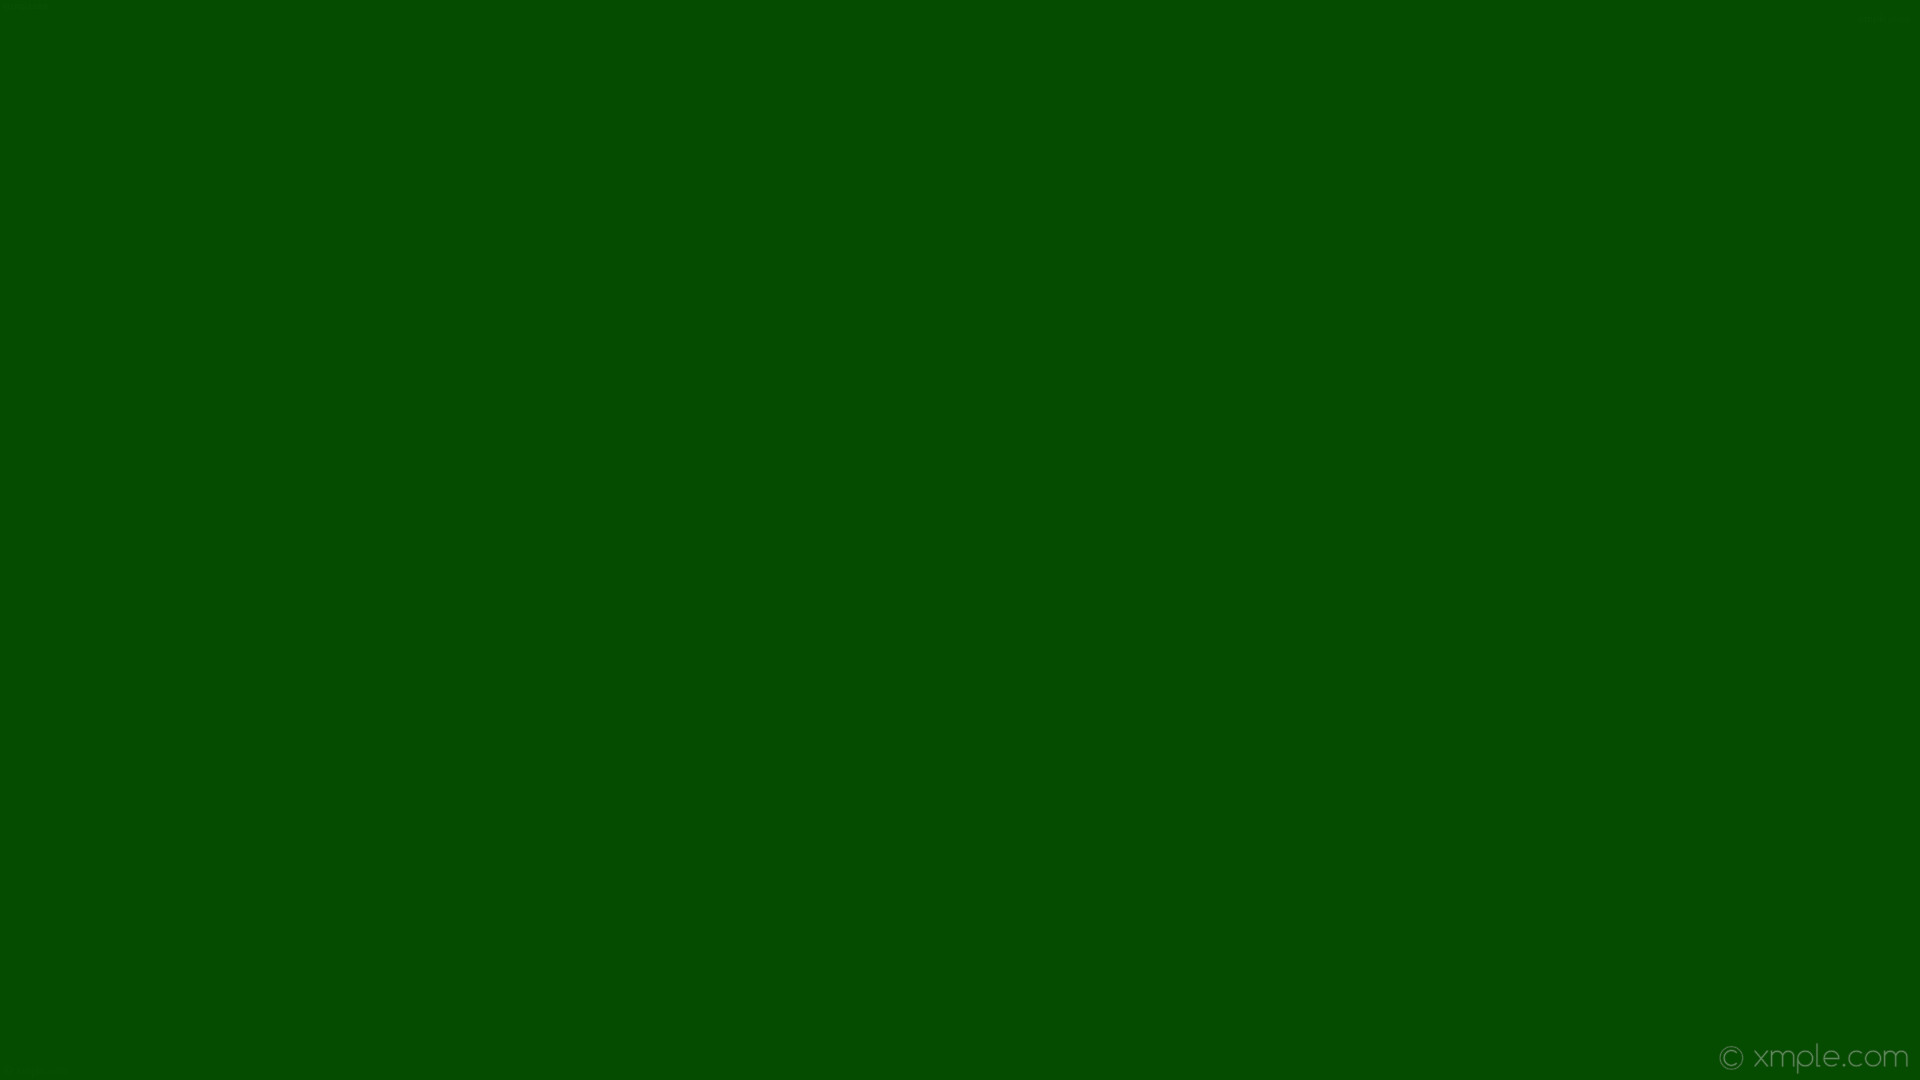 Wallpaper green one colour plain solid color single dark green c00